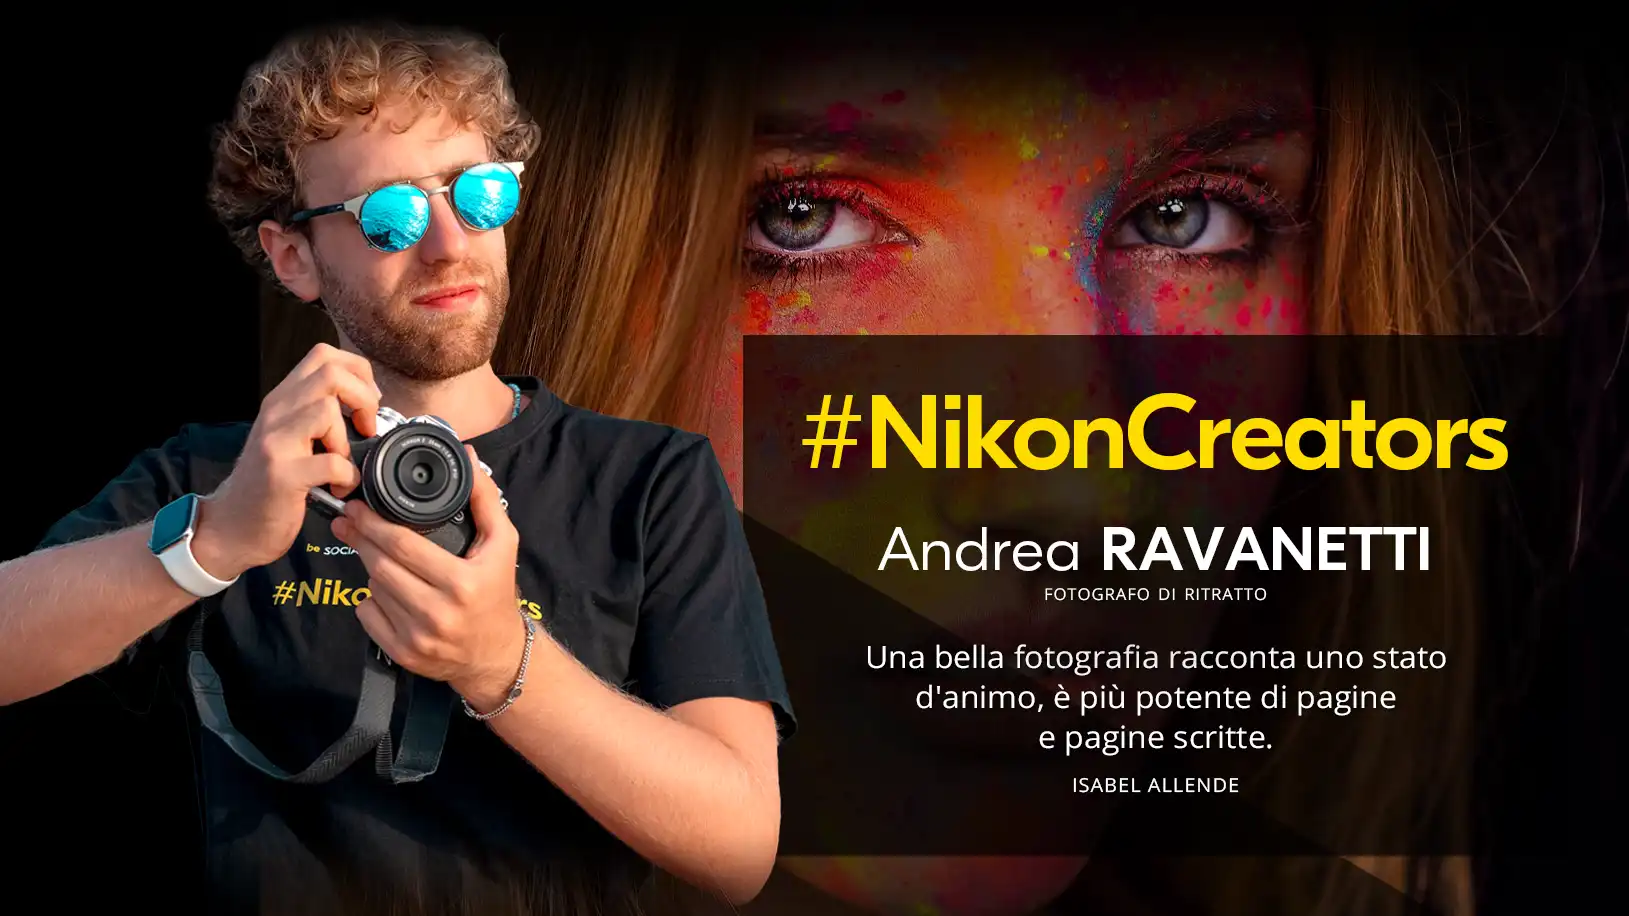 Andrea Ravanetti, #NikonCreators